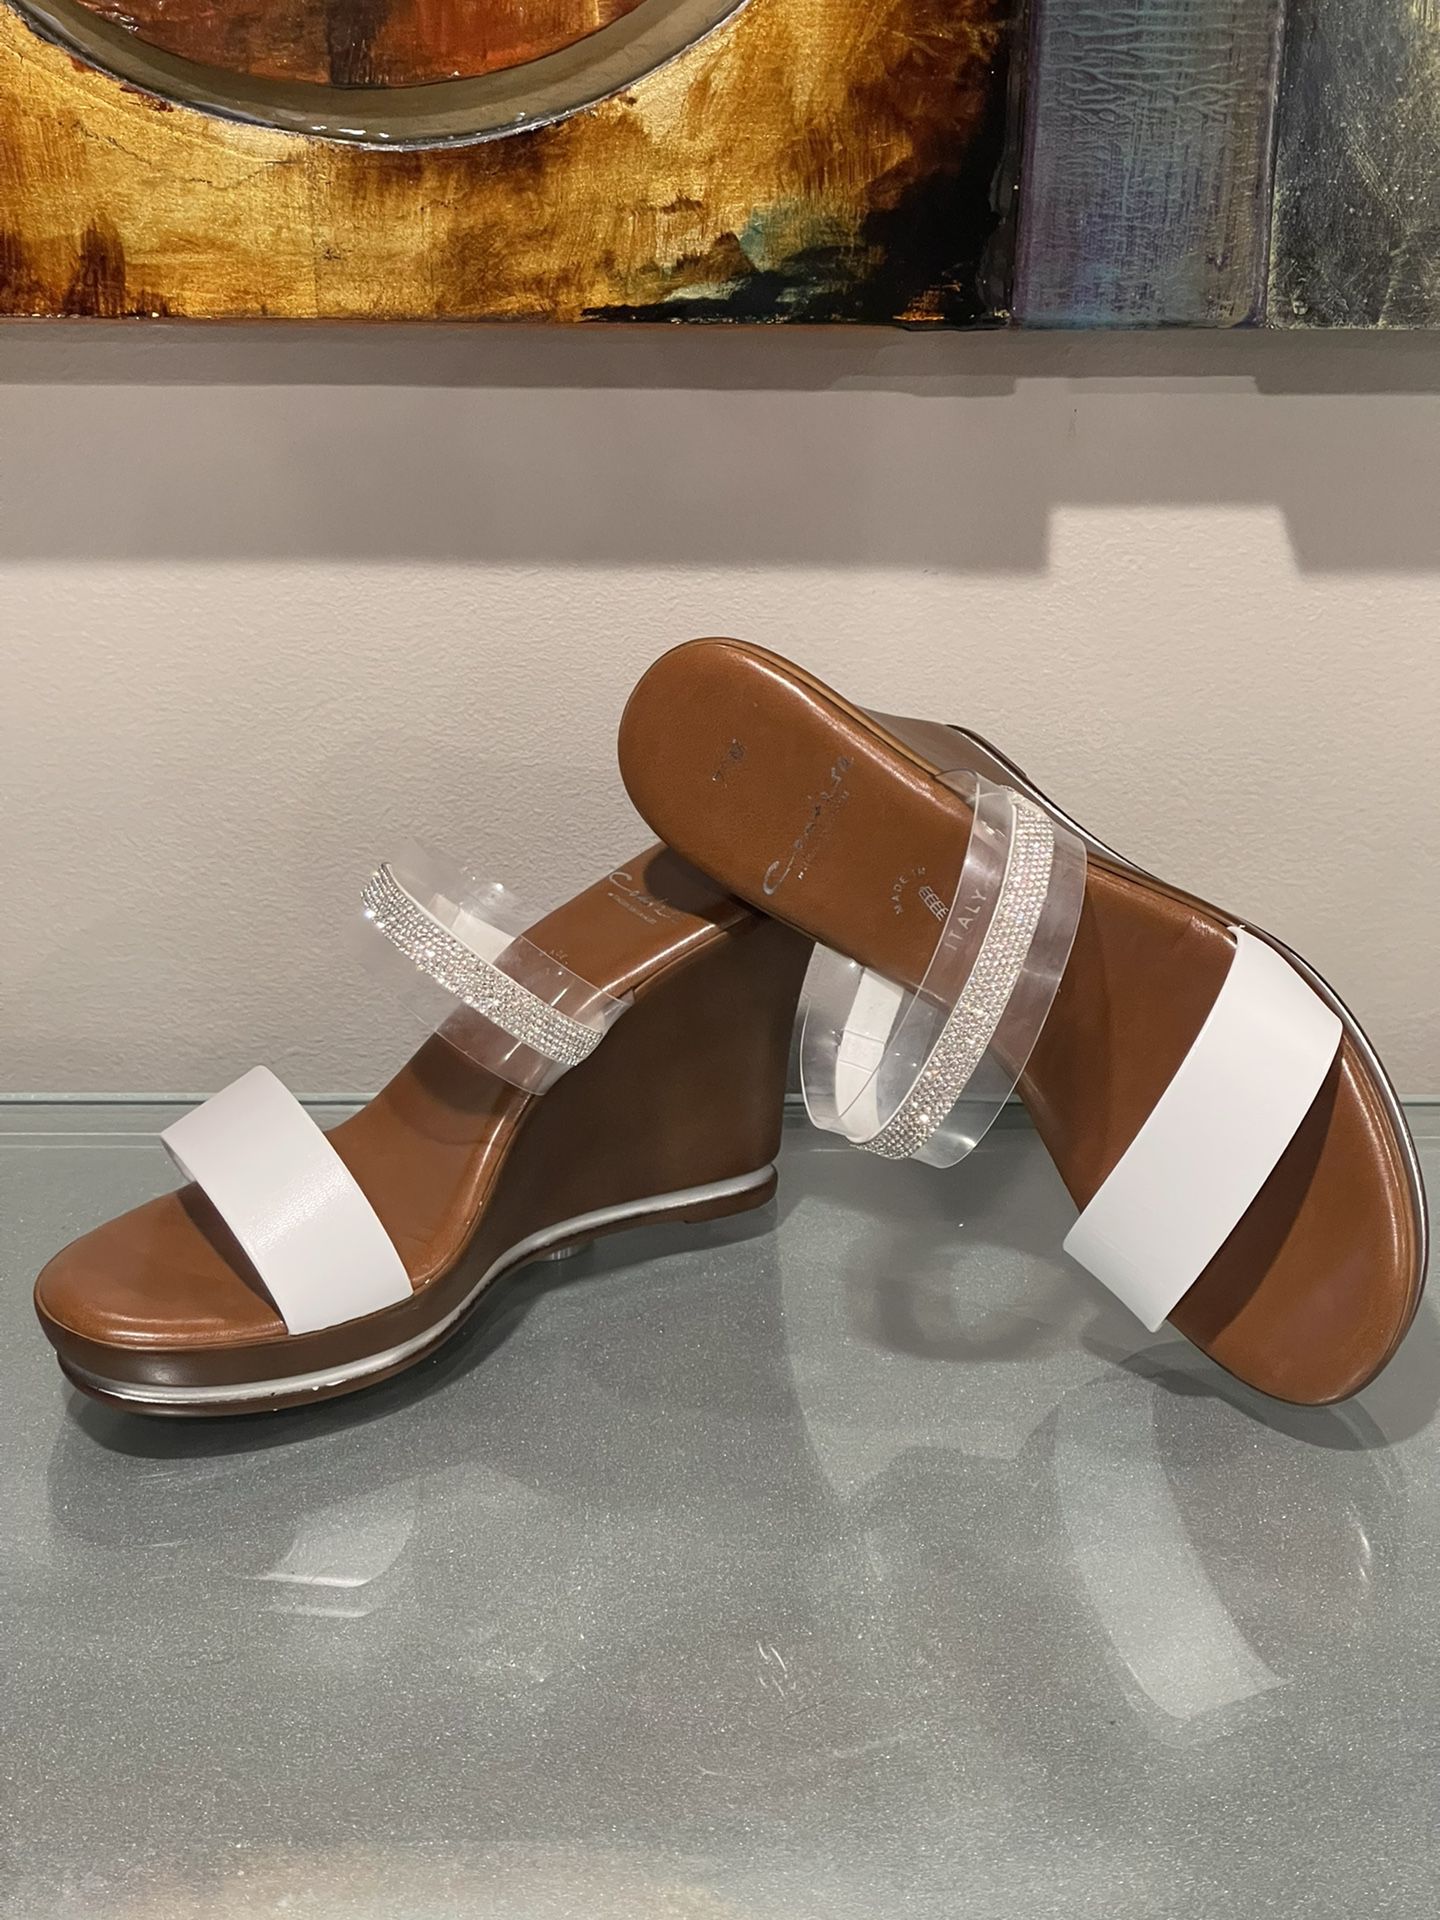 Designer Sandals for Sale in Covina, CA - OfferUp